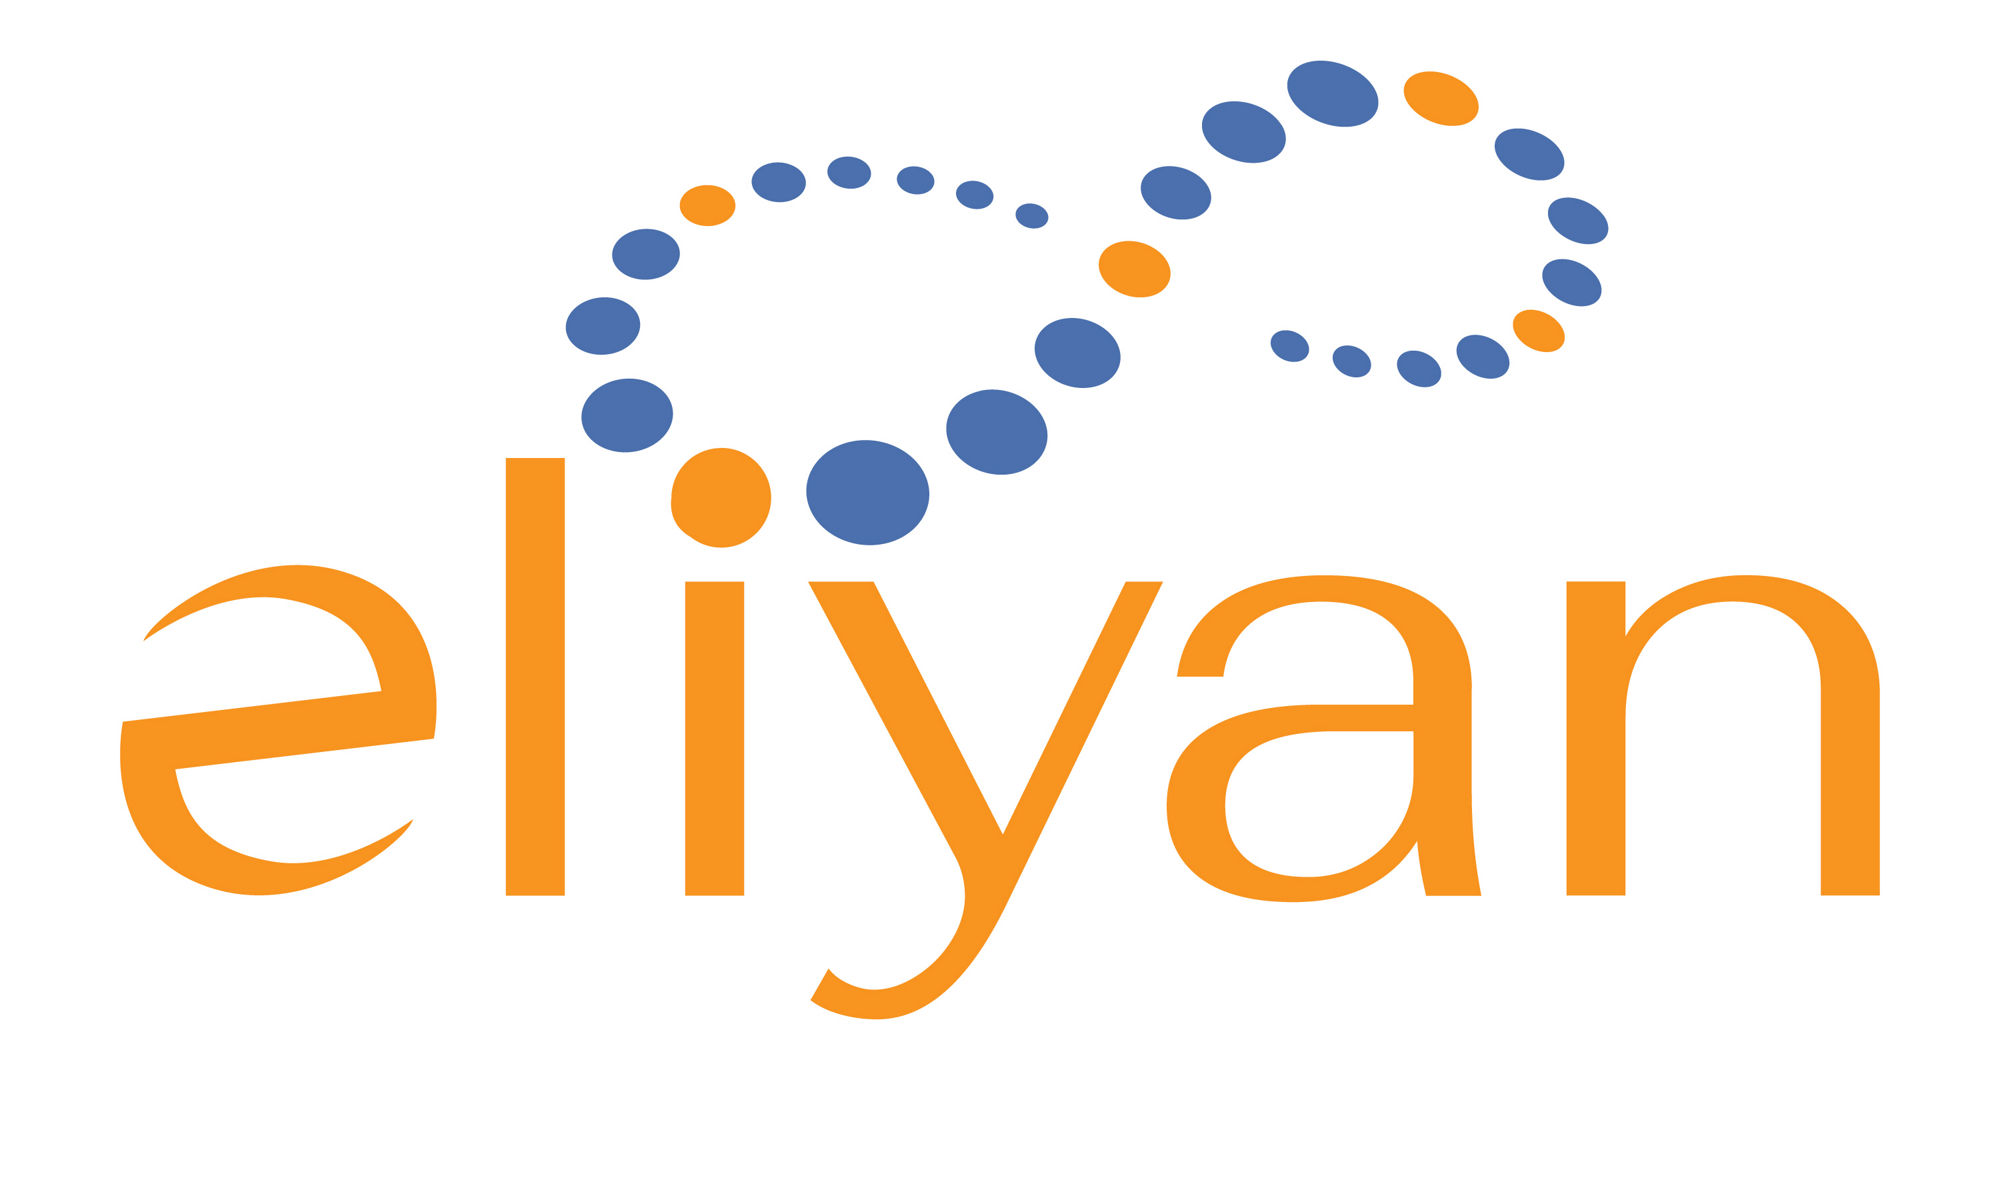 Eliyan 公司標誌